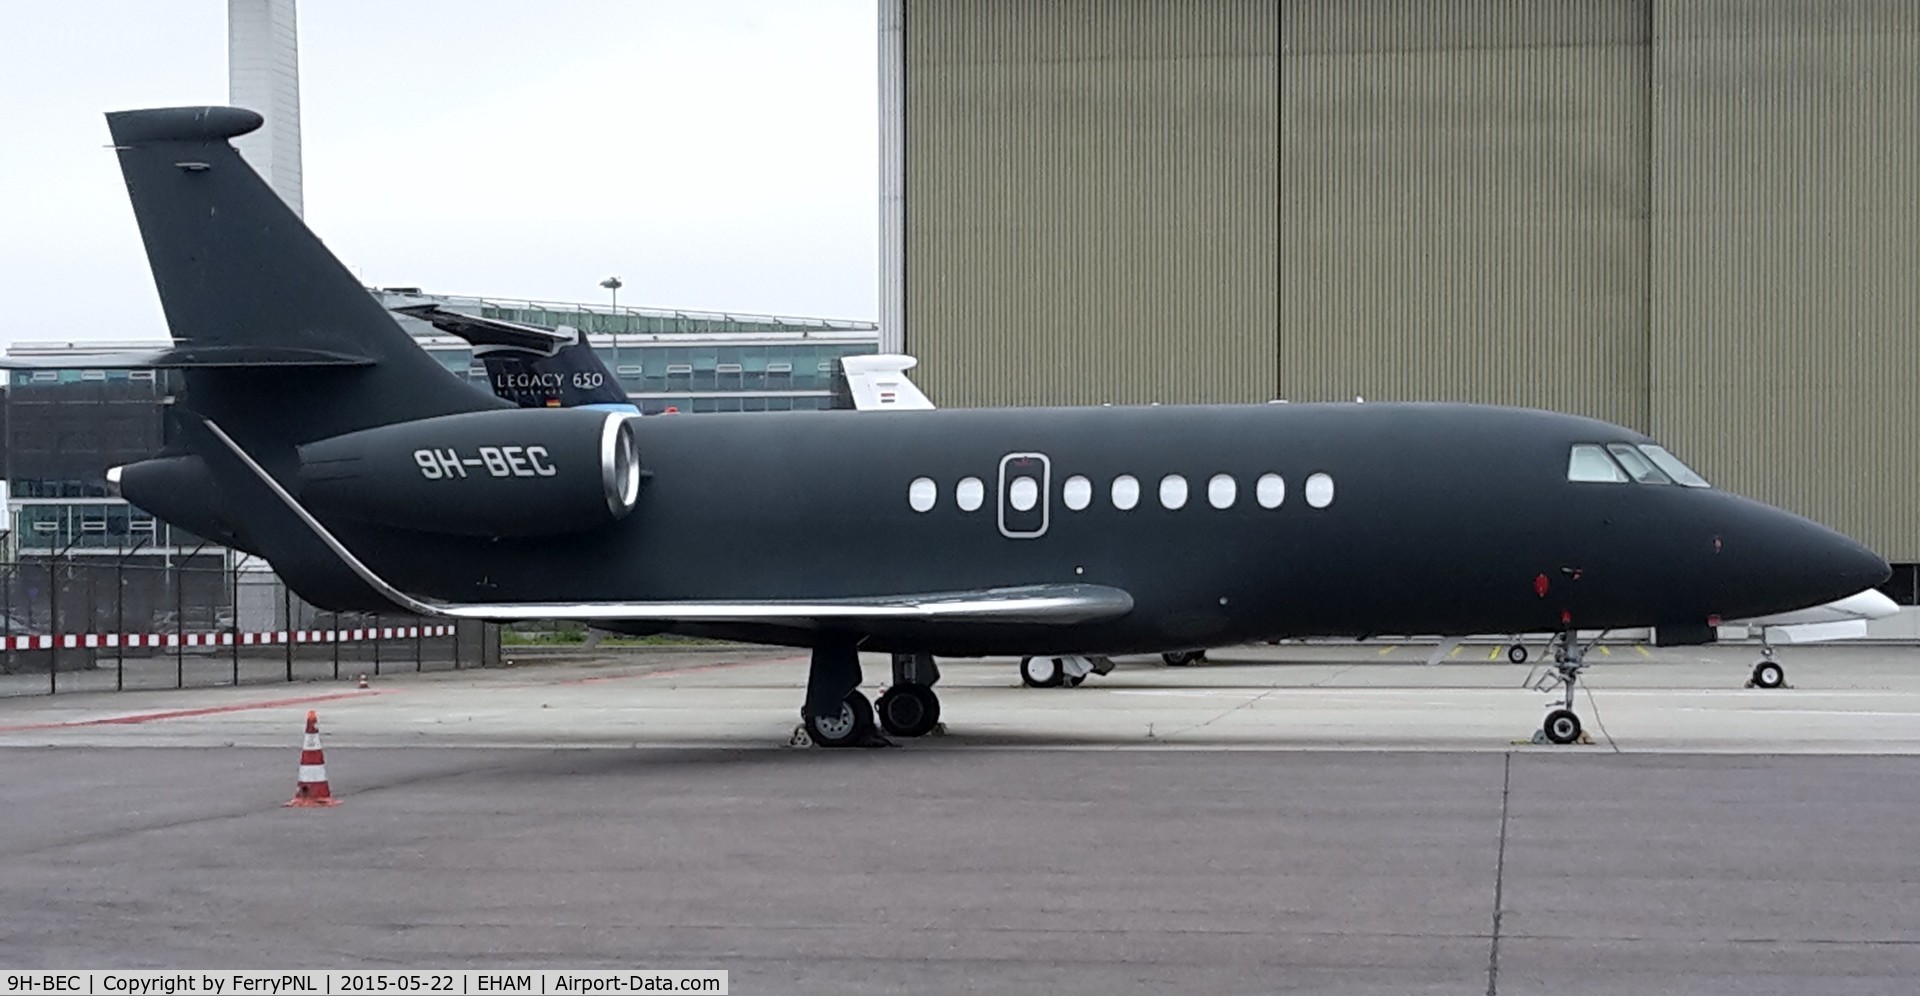 9H-BEC, 2005 Dassault Falcon 2000EX C/N 63, Black beauty